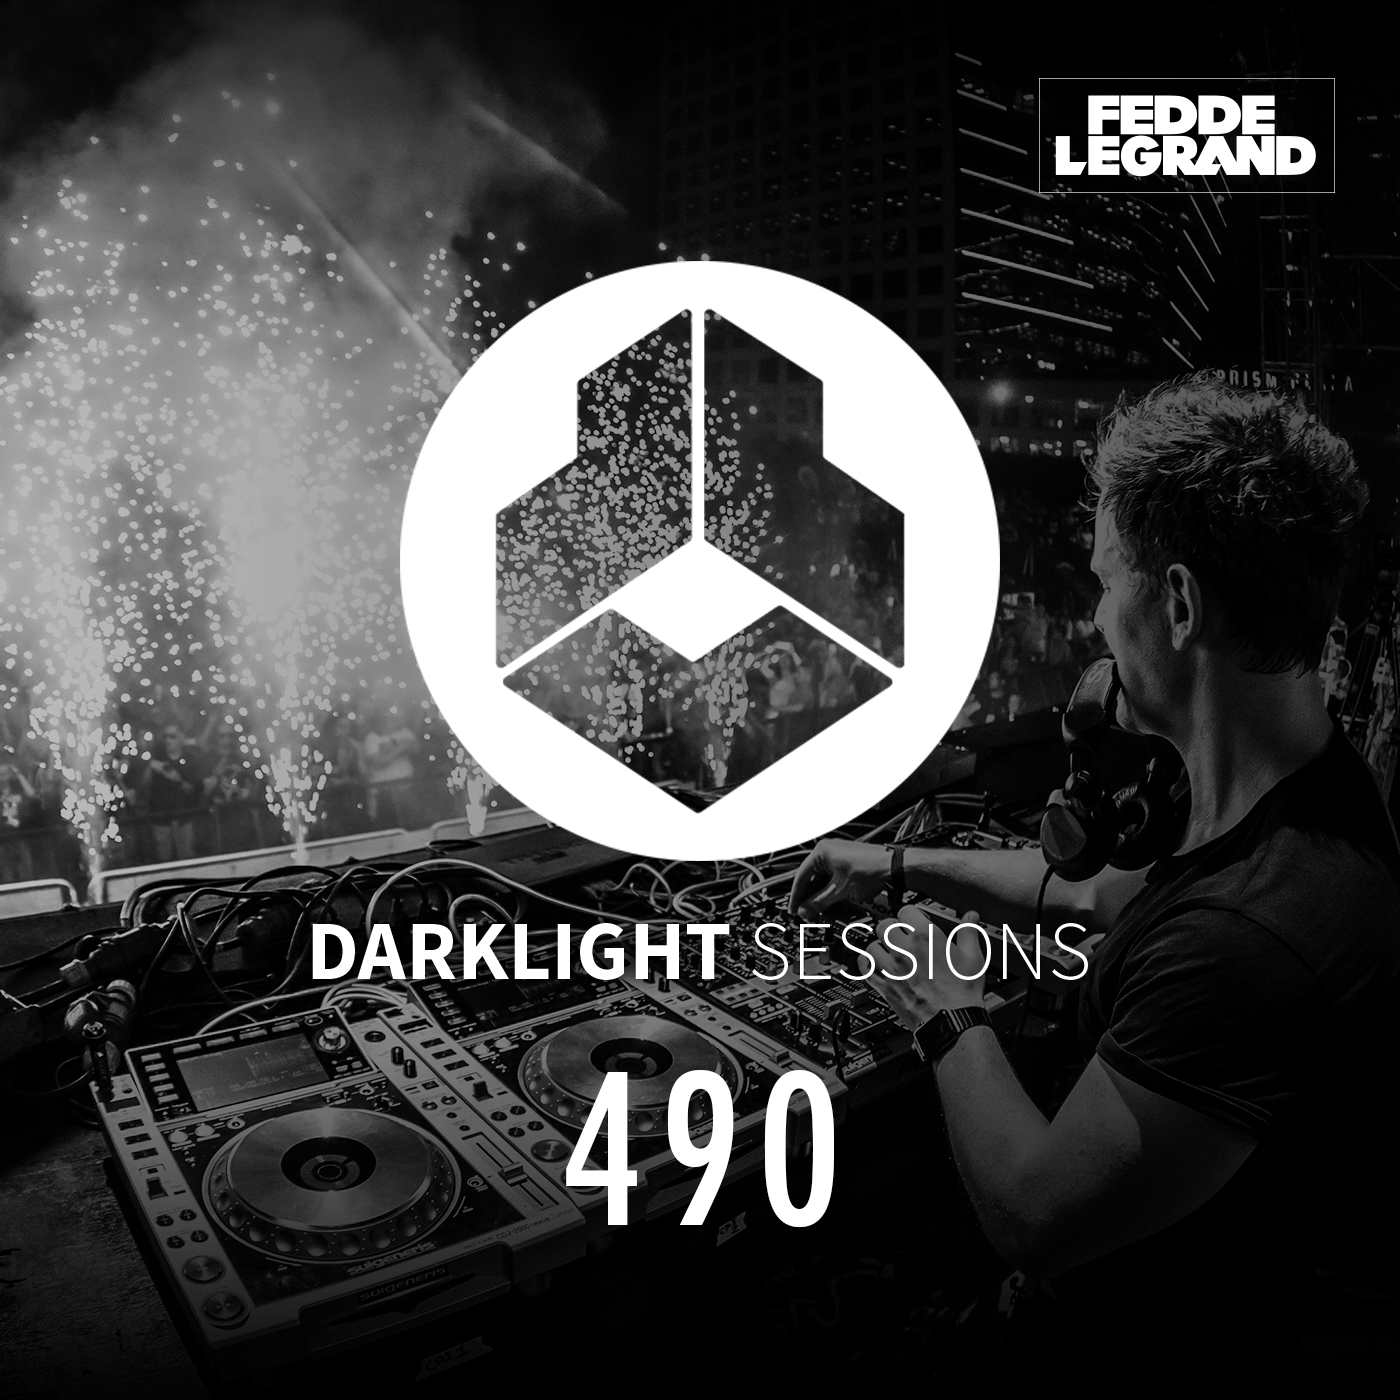 Darklight Sessions 490